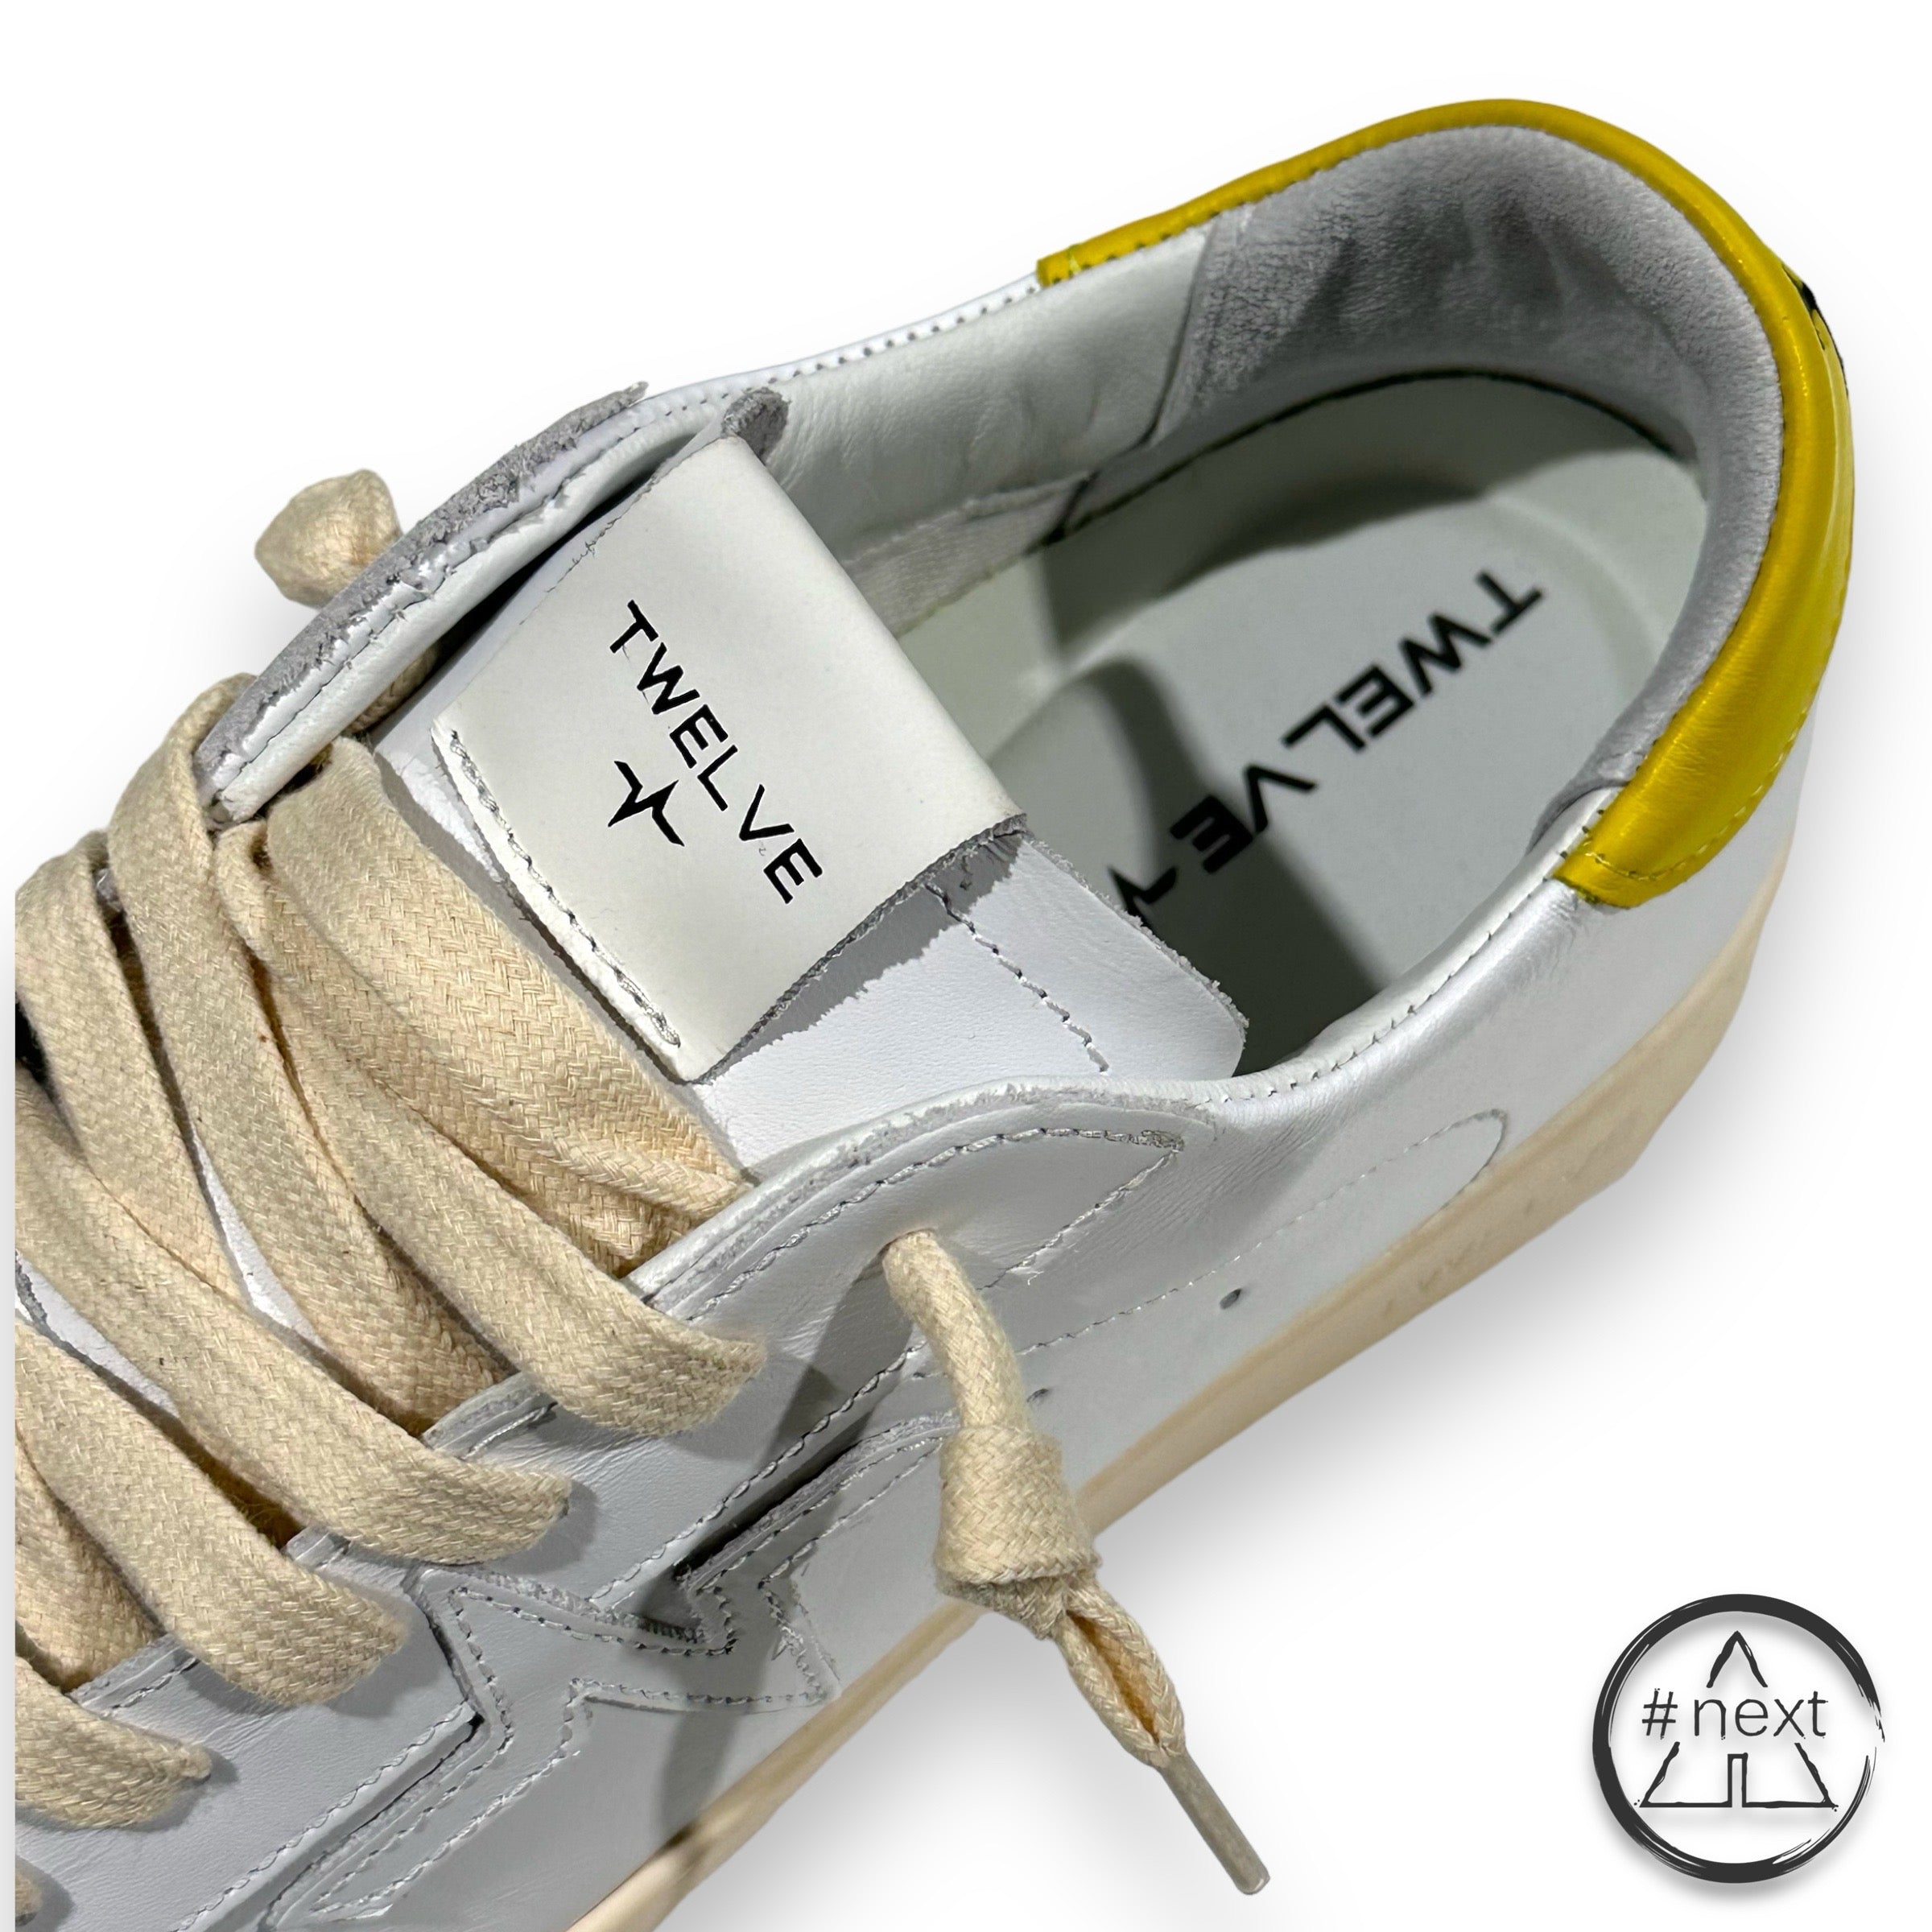 (#D) TWELVE - Sneakers CLASSIC - Bianco, Giallo. - ANDY #NEXT